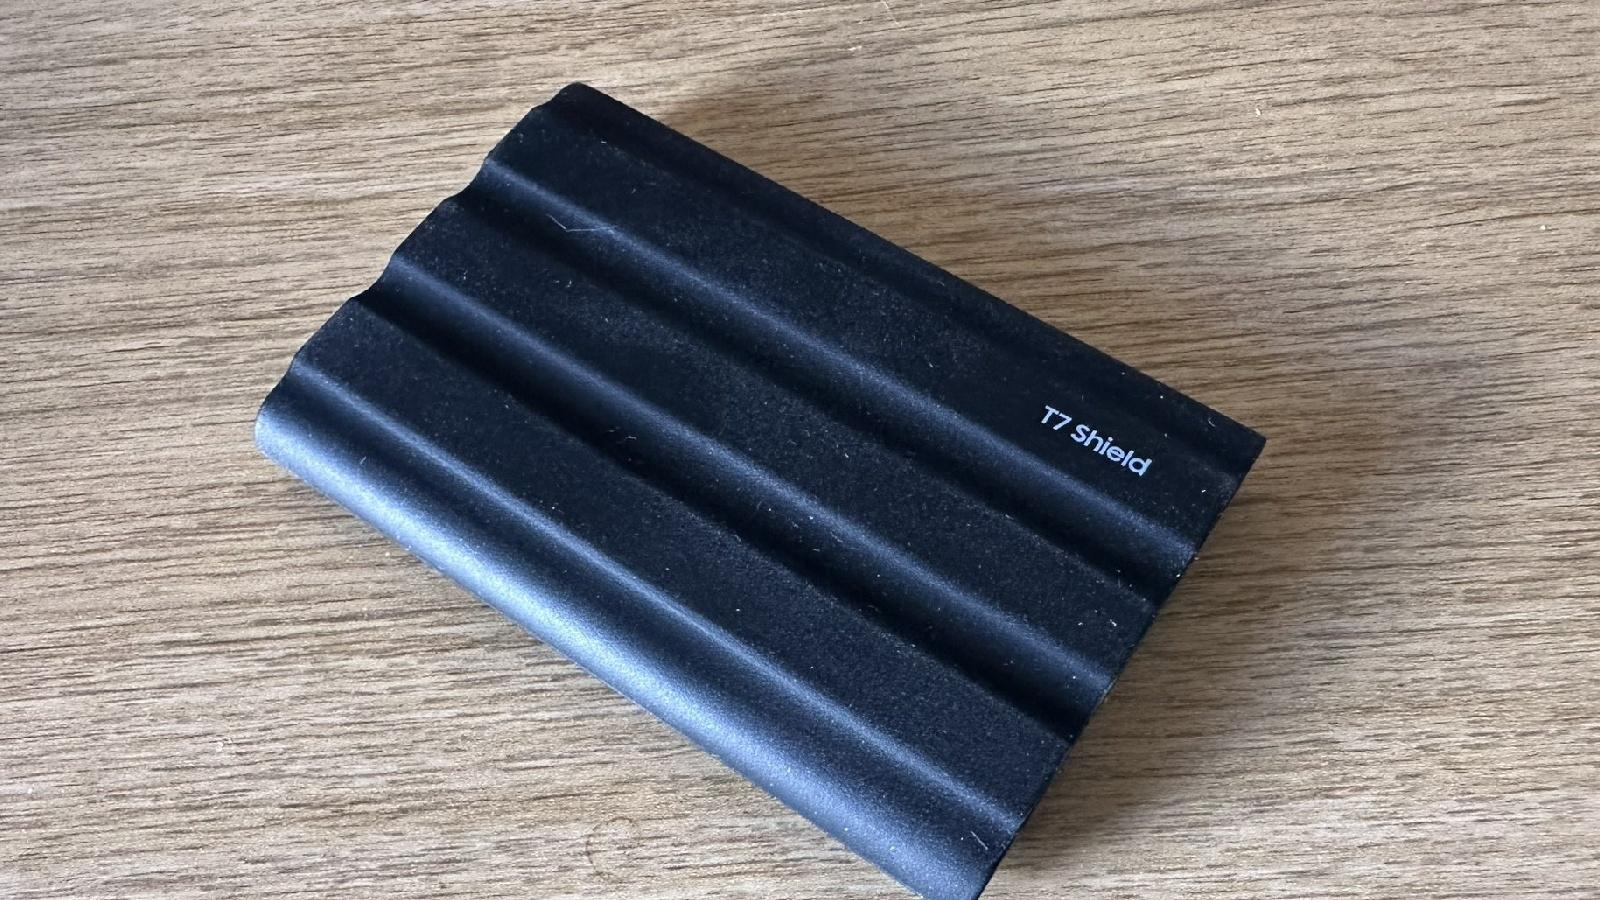 Samsung Portable SSD T7 Shield 4TB Review: Pro-Grade USB-C Storage